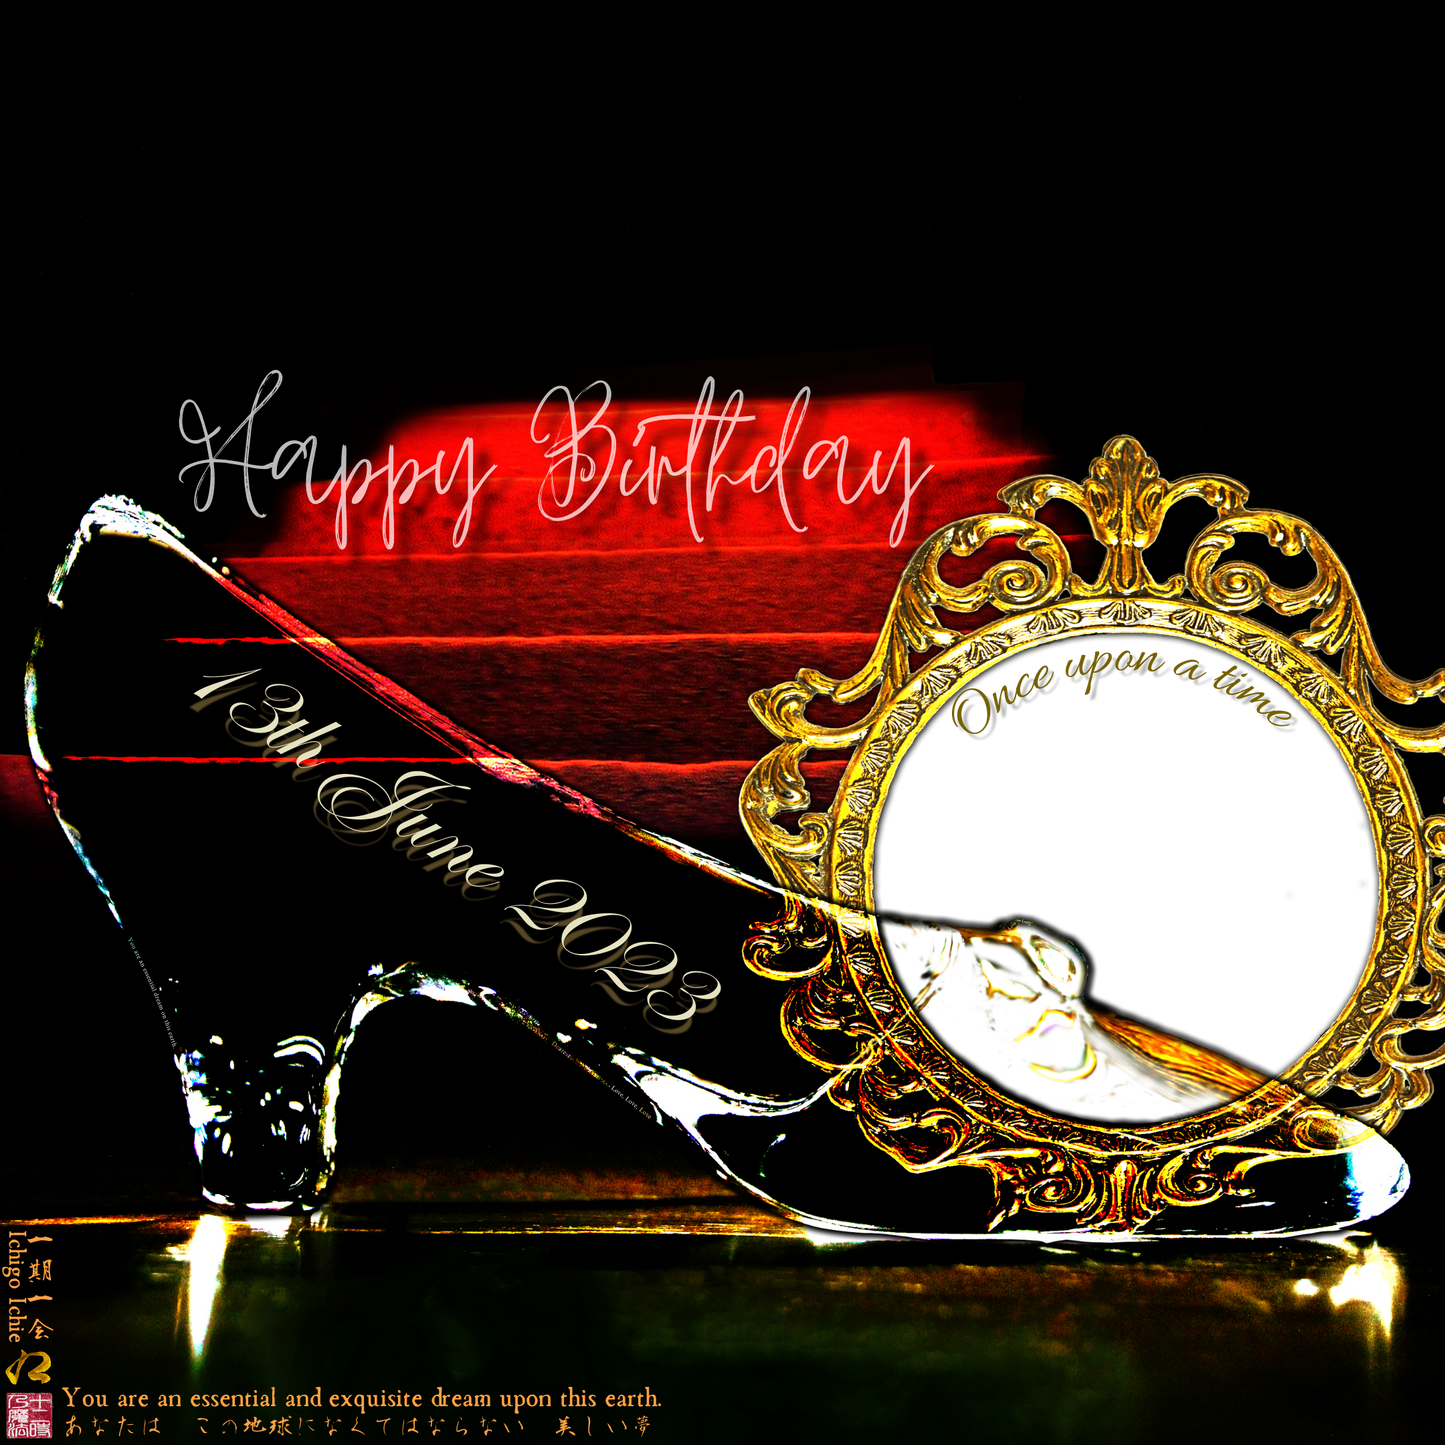 Happy Birthday Glass Slipper "Ichigo Ichie" 13th June 2023 the Right (1-of-1) NFT Art